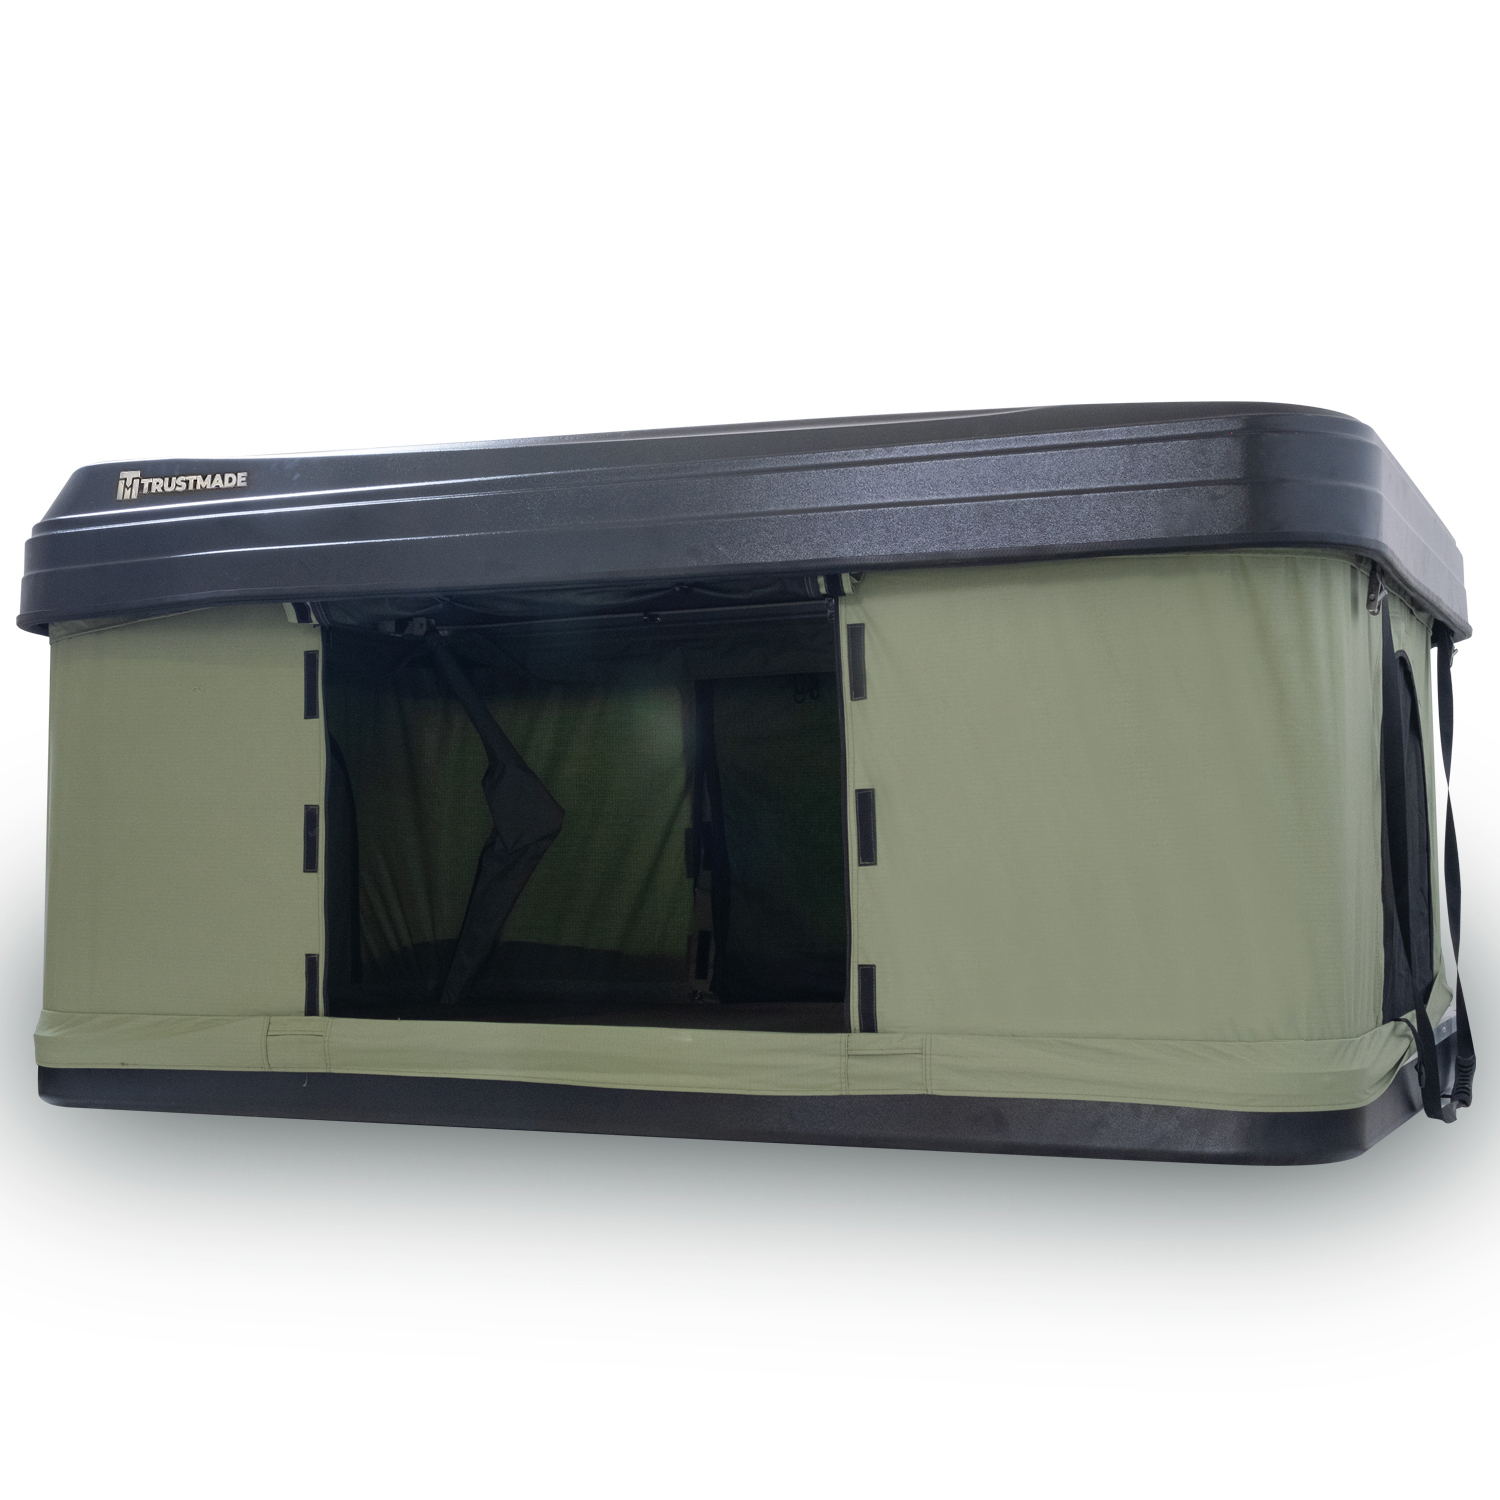 Nomad Hardshell Rooftop Tent - Black/Green